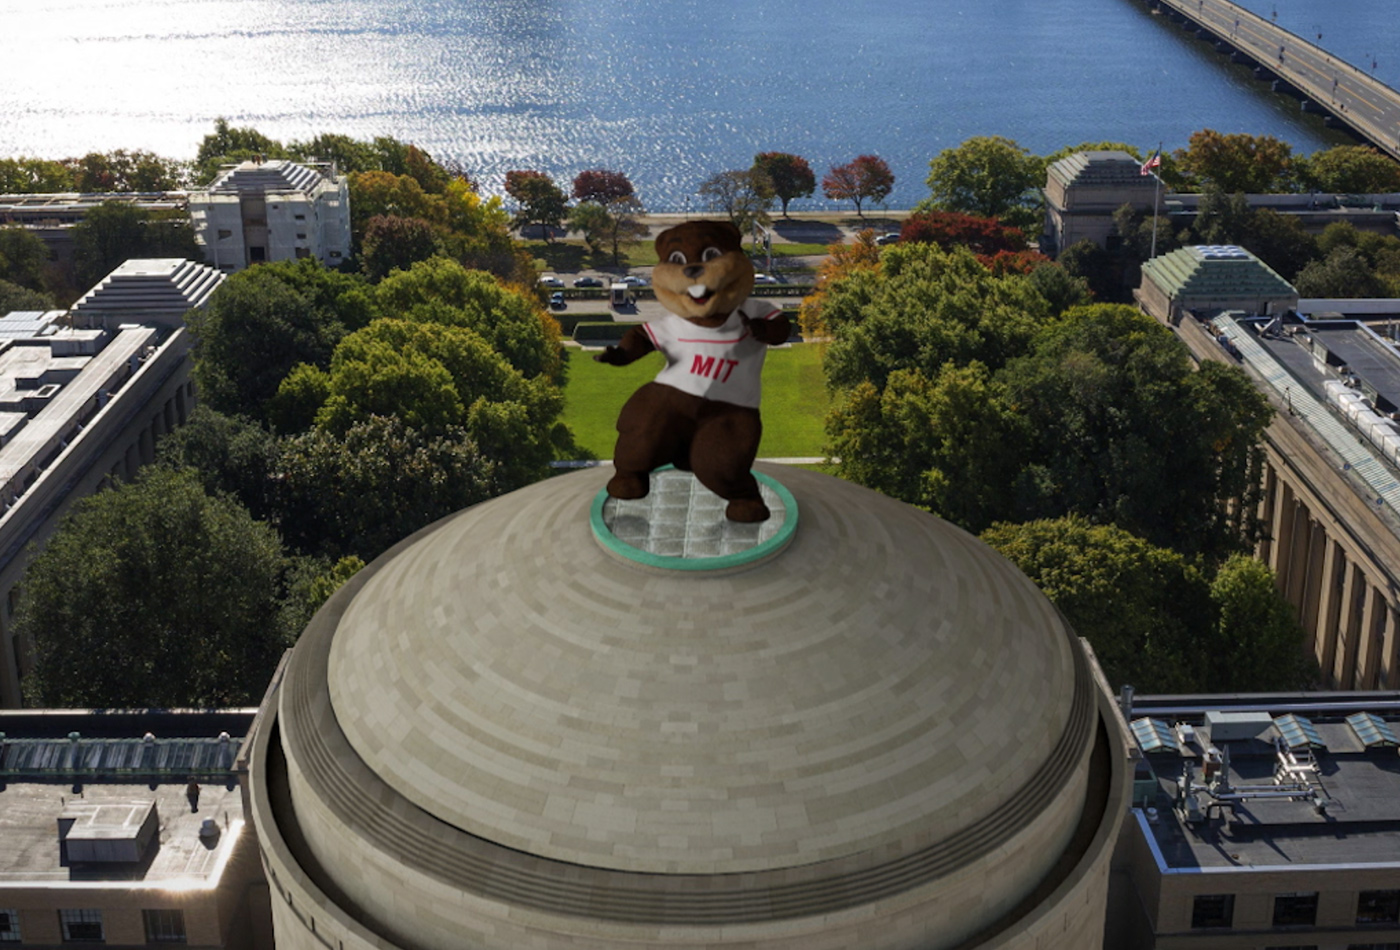 Tim the MIT beaver mascot dances atop the MIT dome.